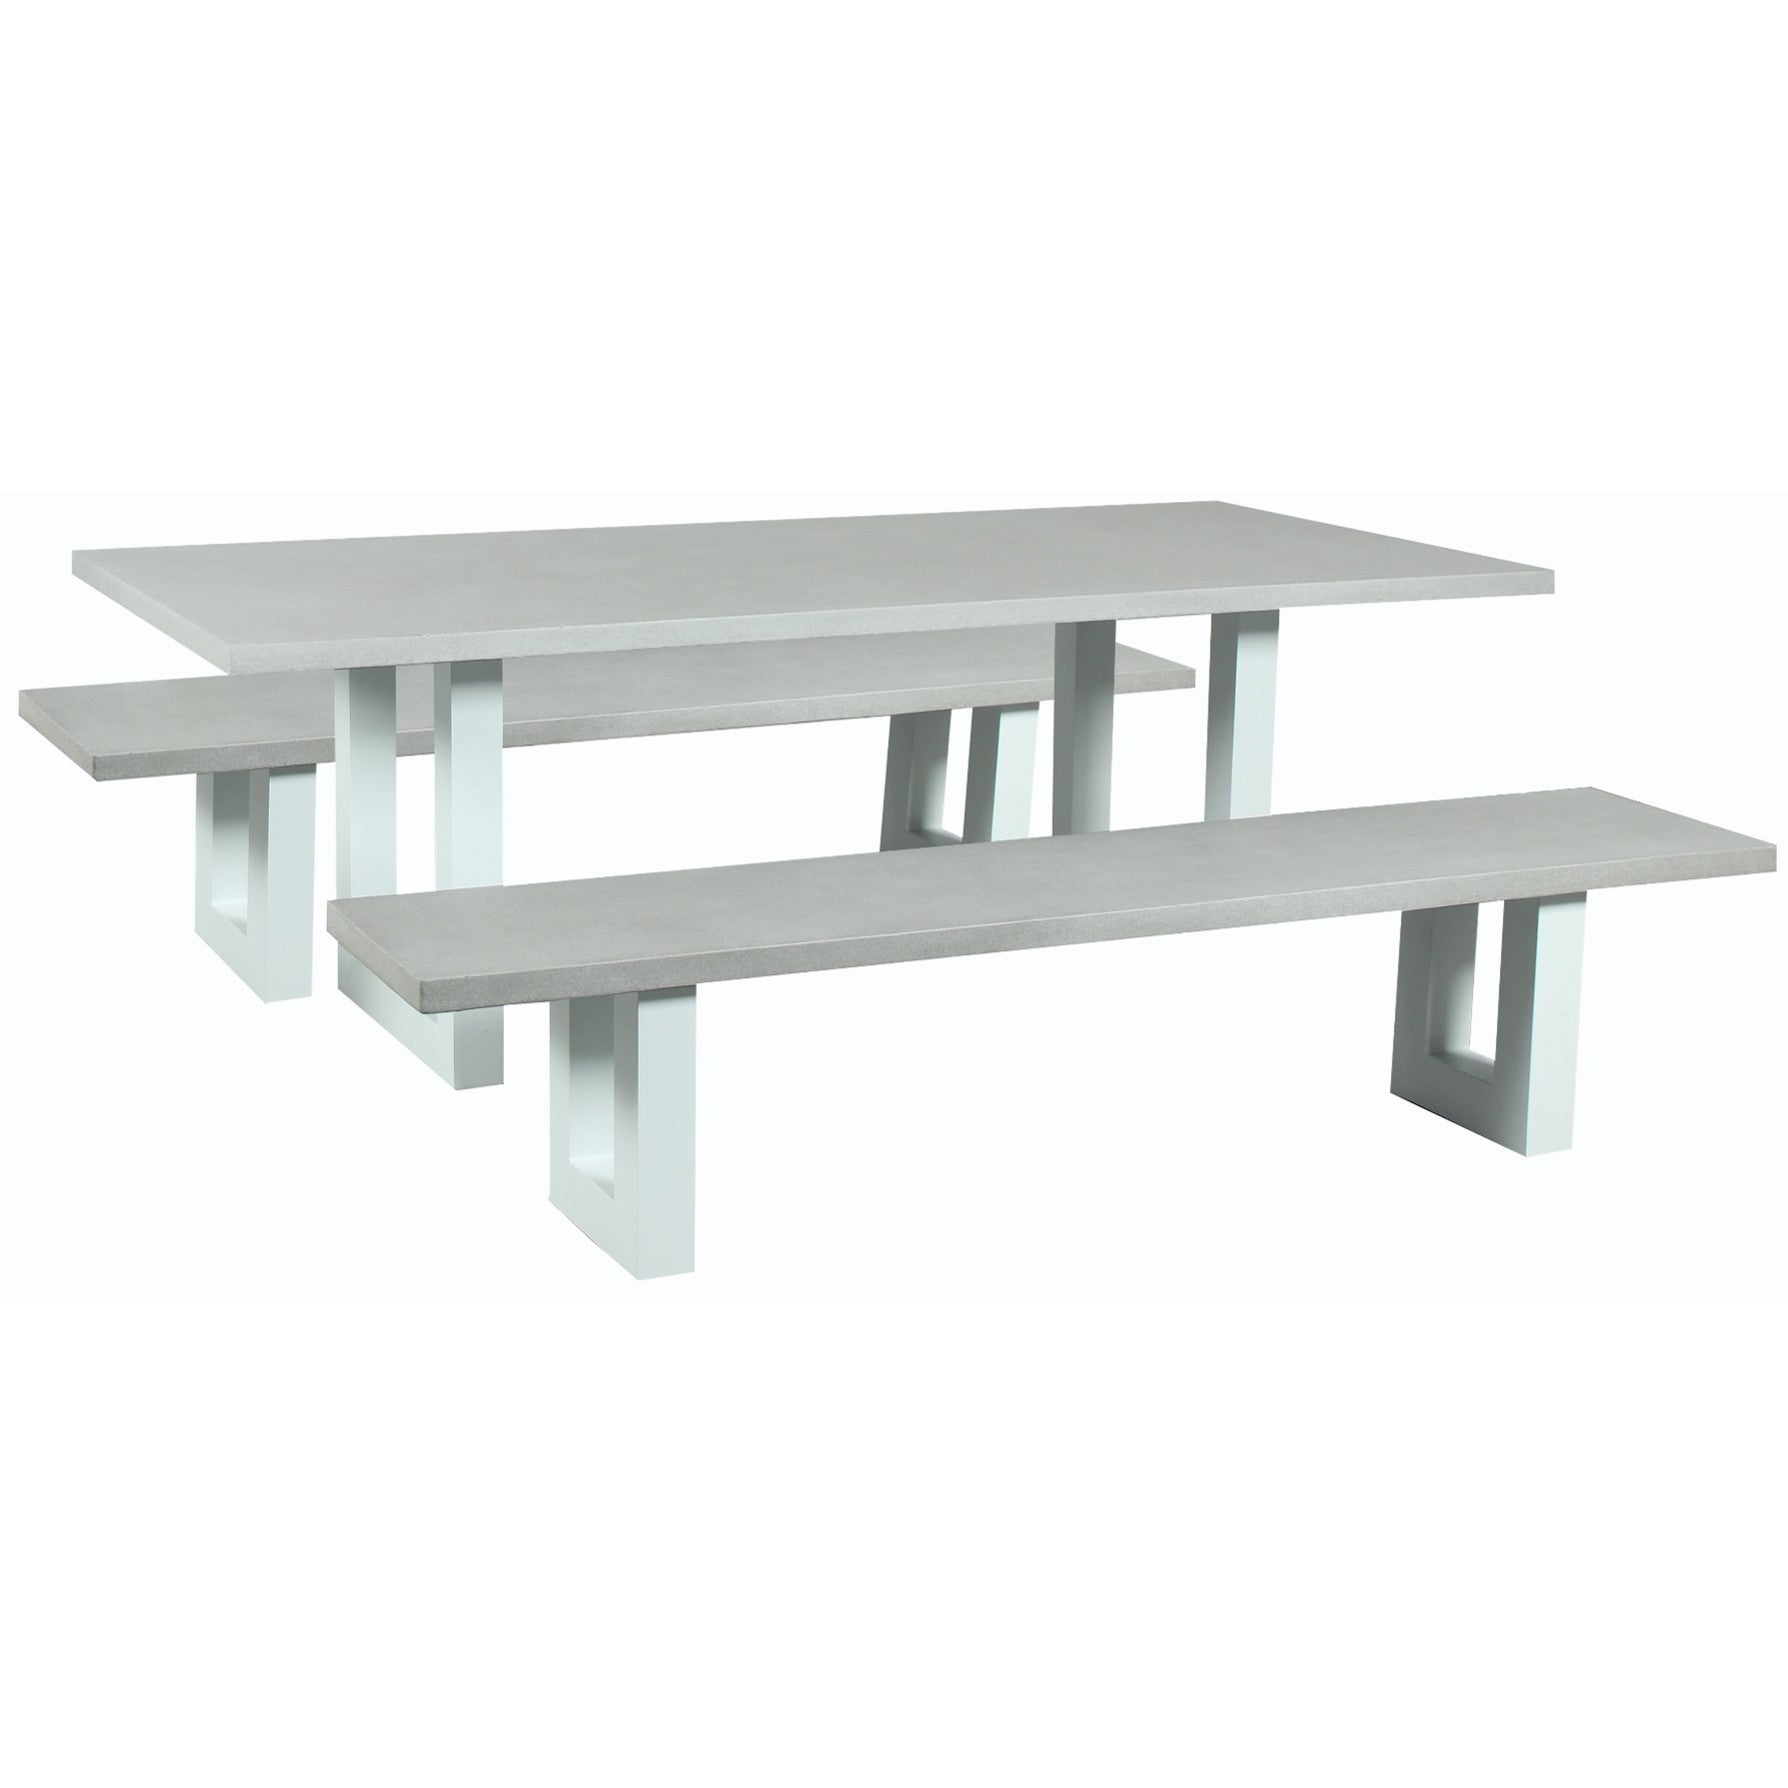 CEMENT DINING TABLE SETTING WHITE U LEG - 2200 x 1000mm